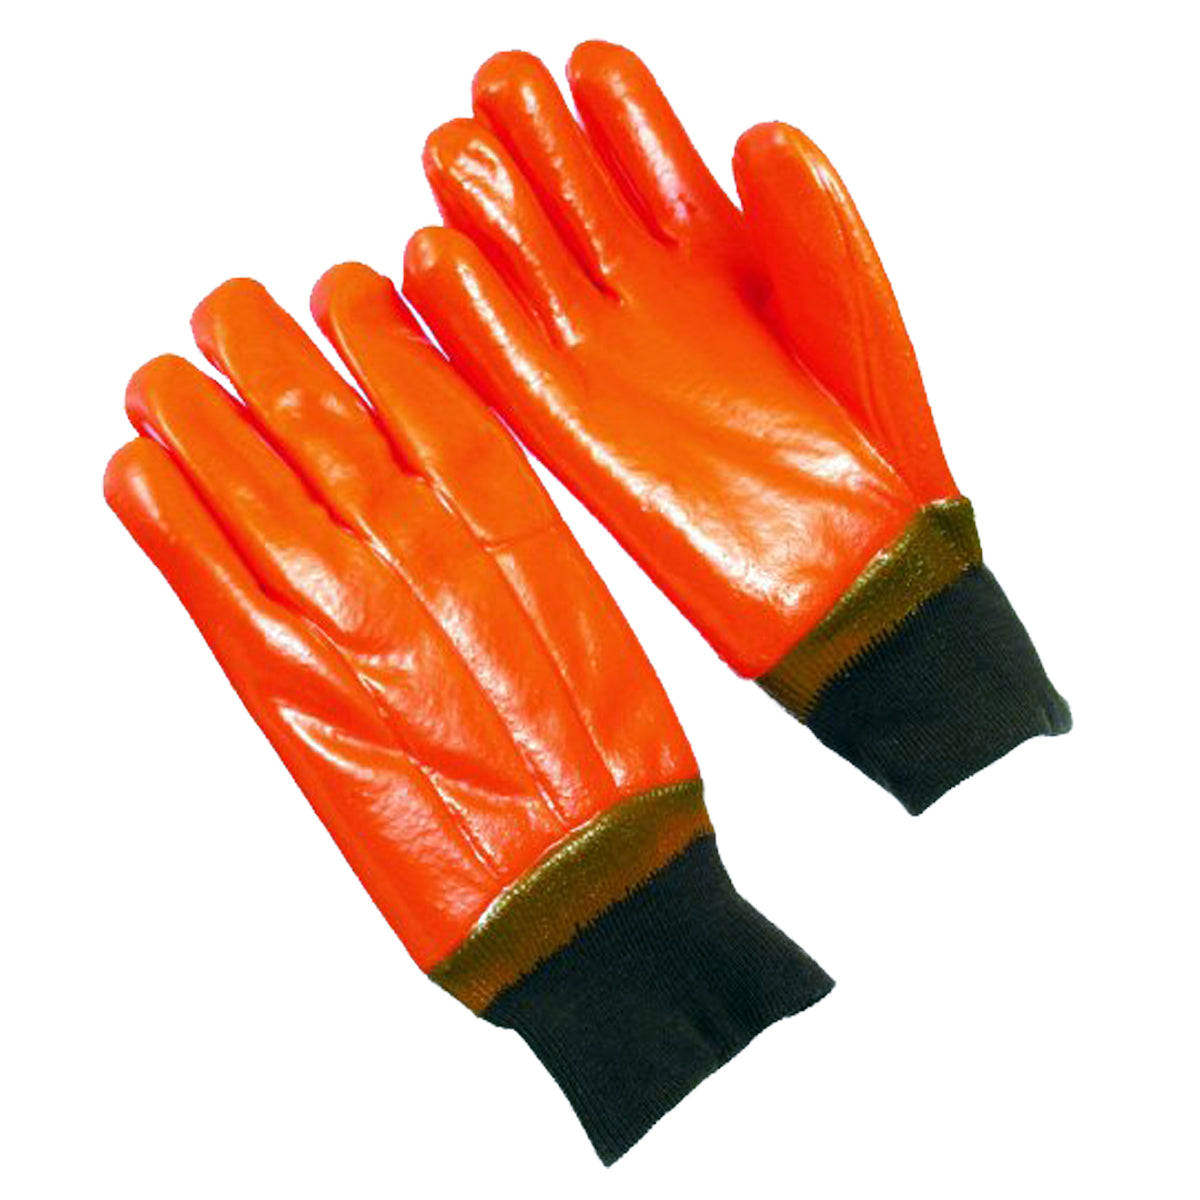 Seattle Glove 8940 Orange Fluorescent Coating with Knit Wrist